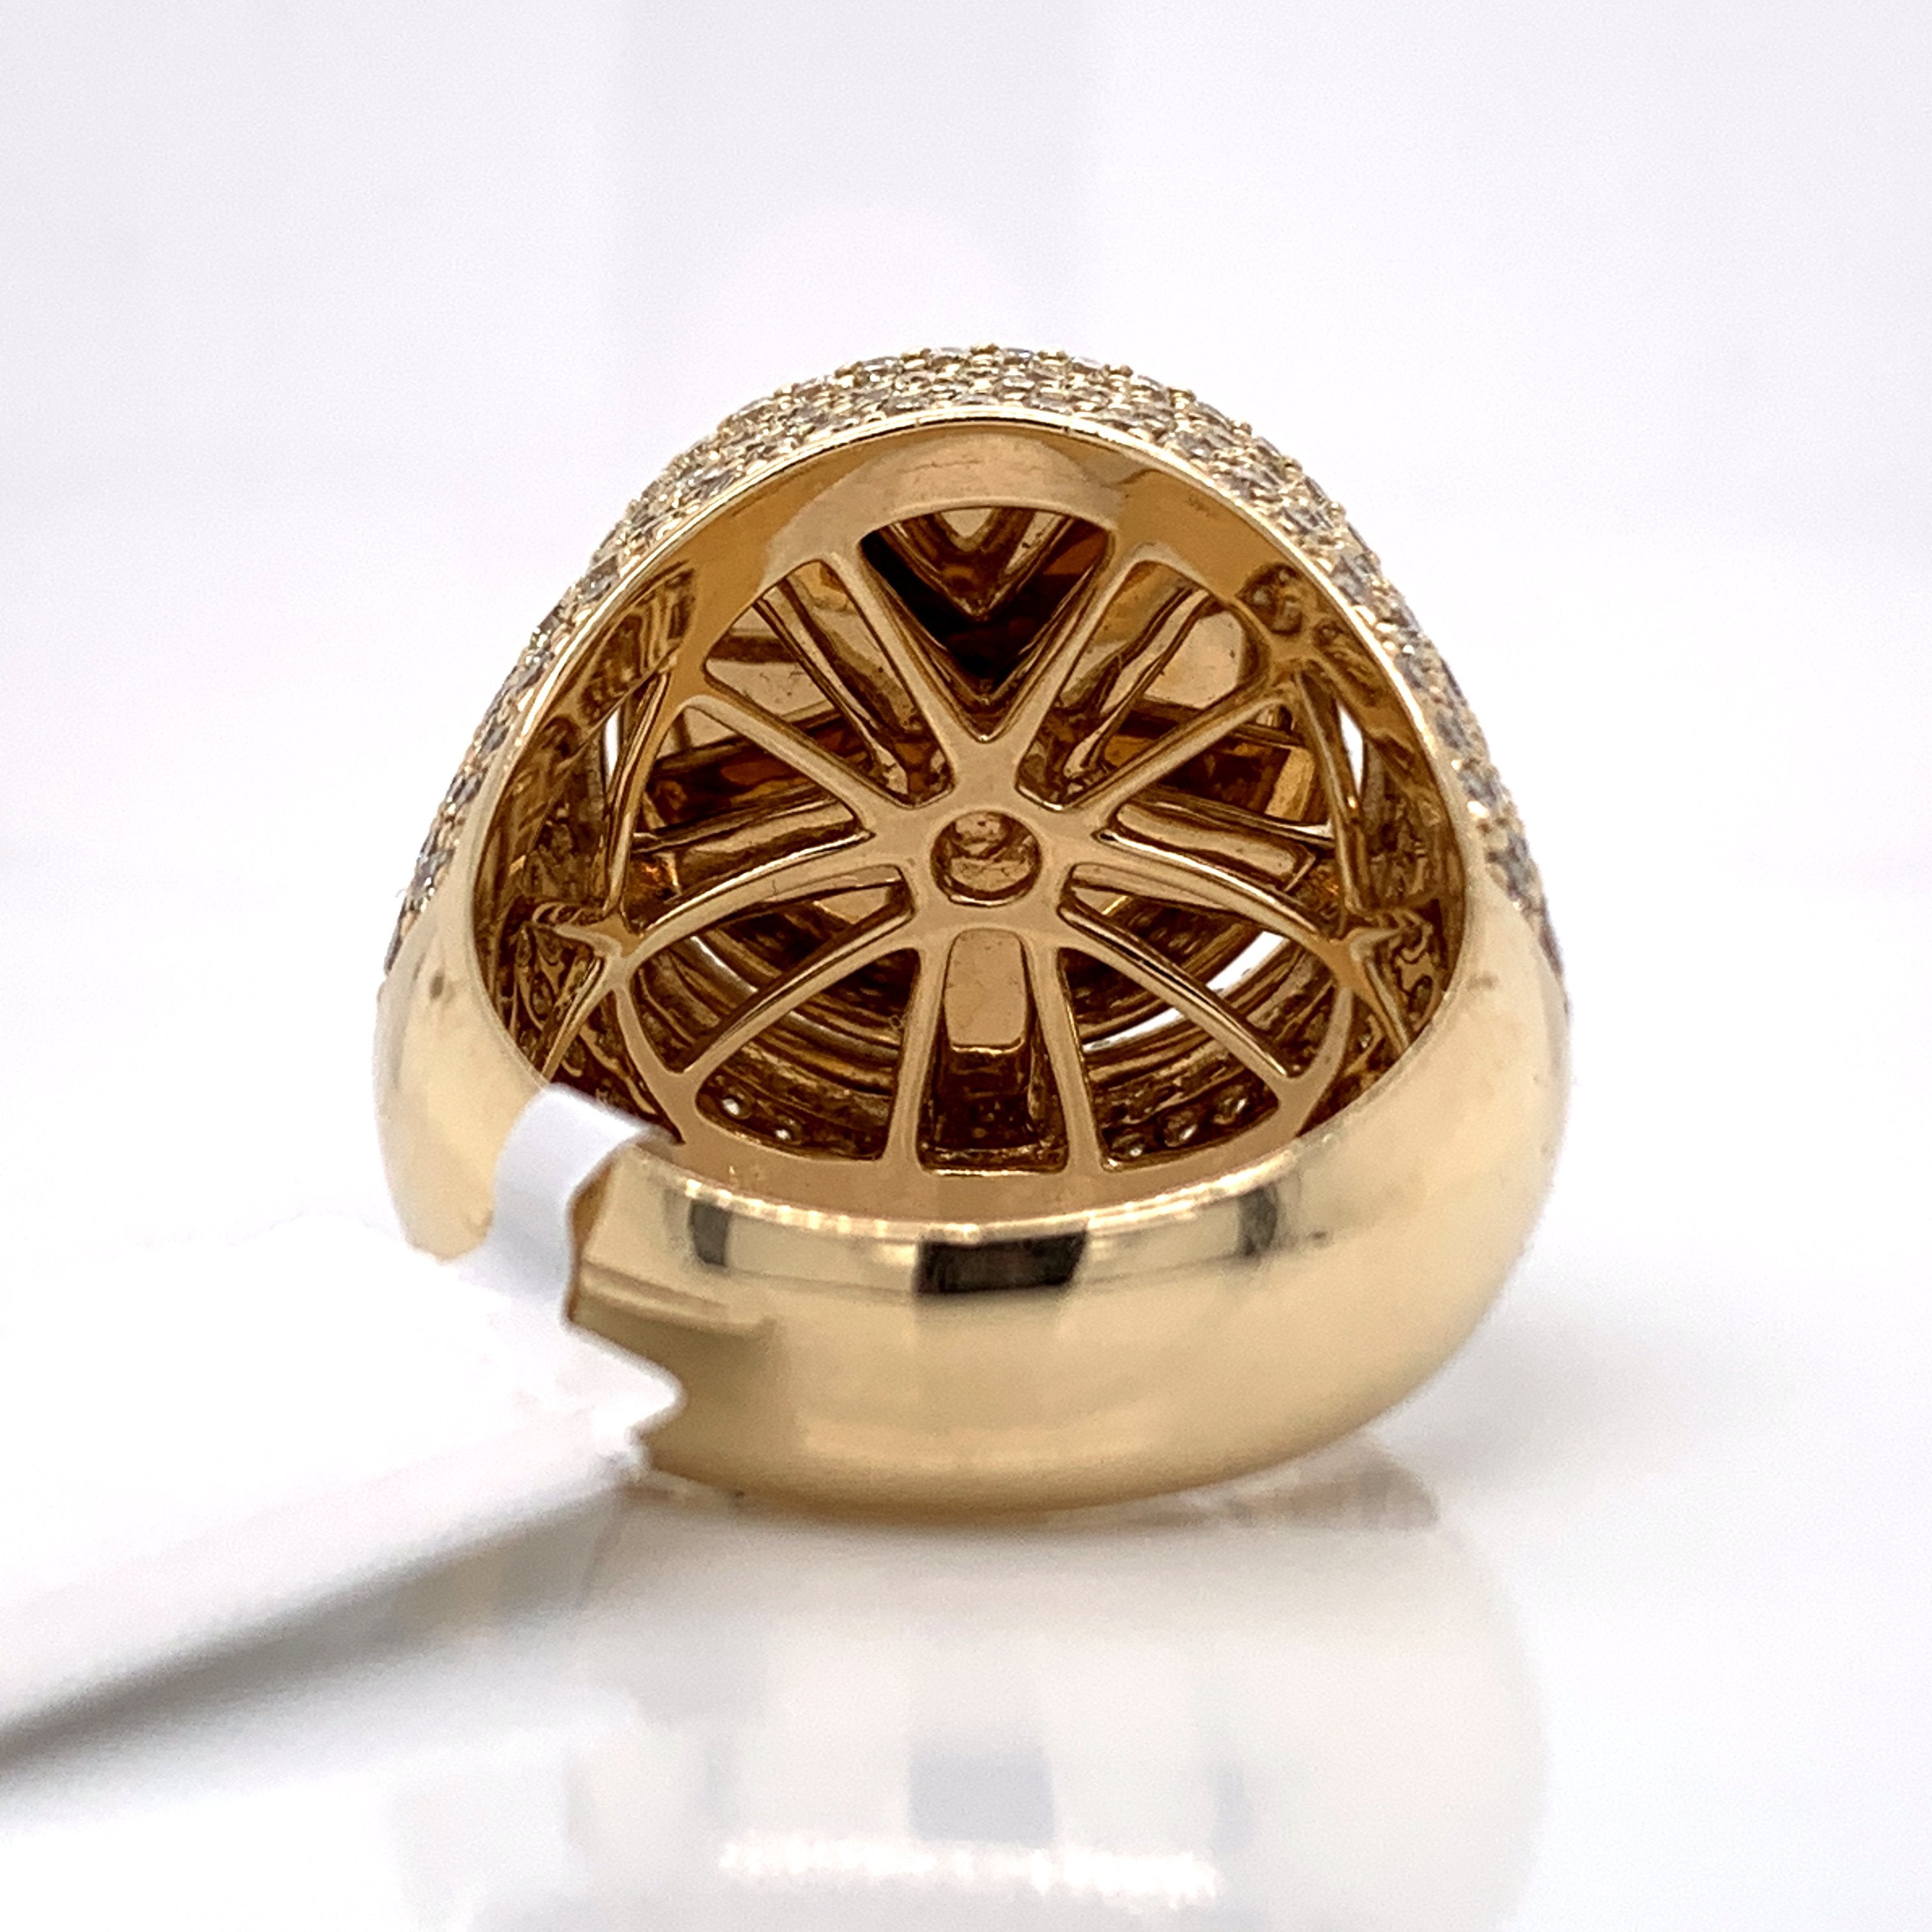 5.25 CT. Diamond Ring in Gold 14K - White Carat - USA & Canada